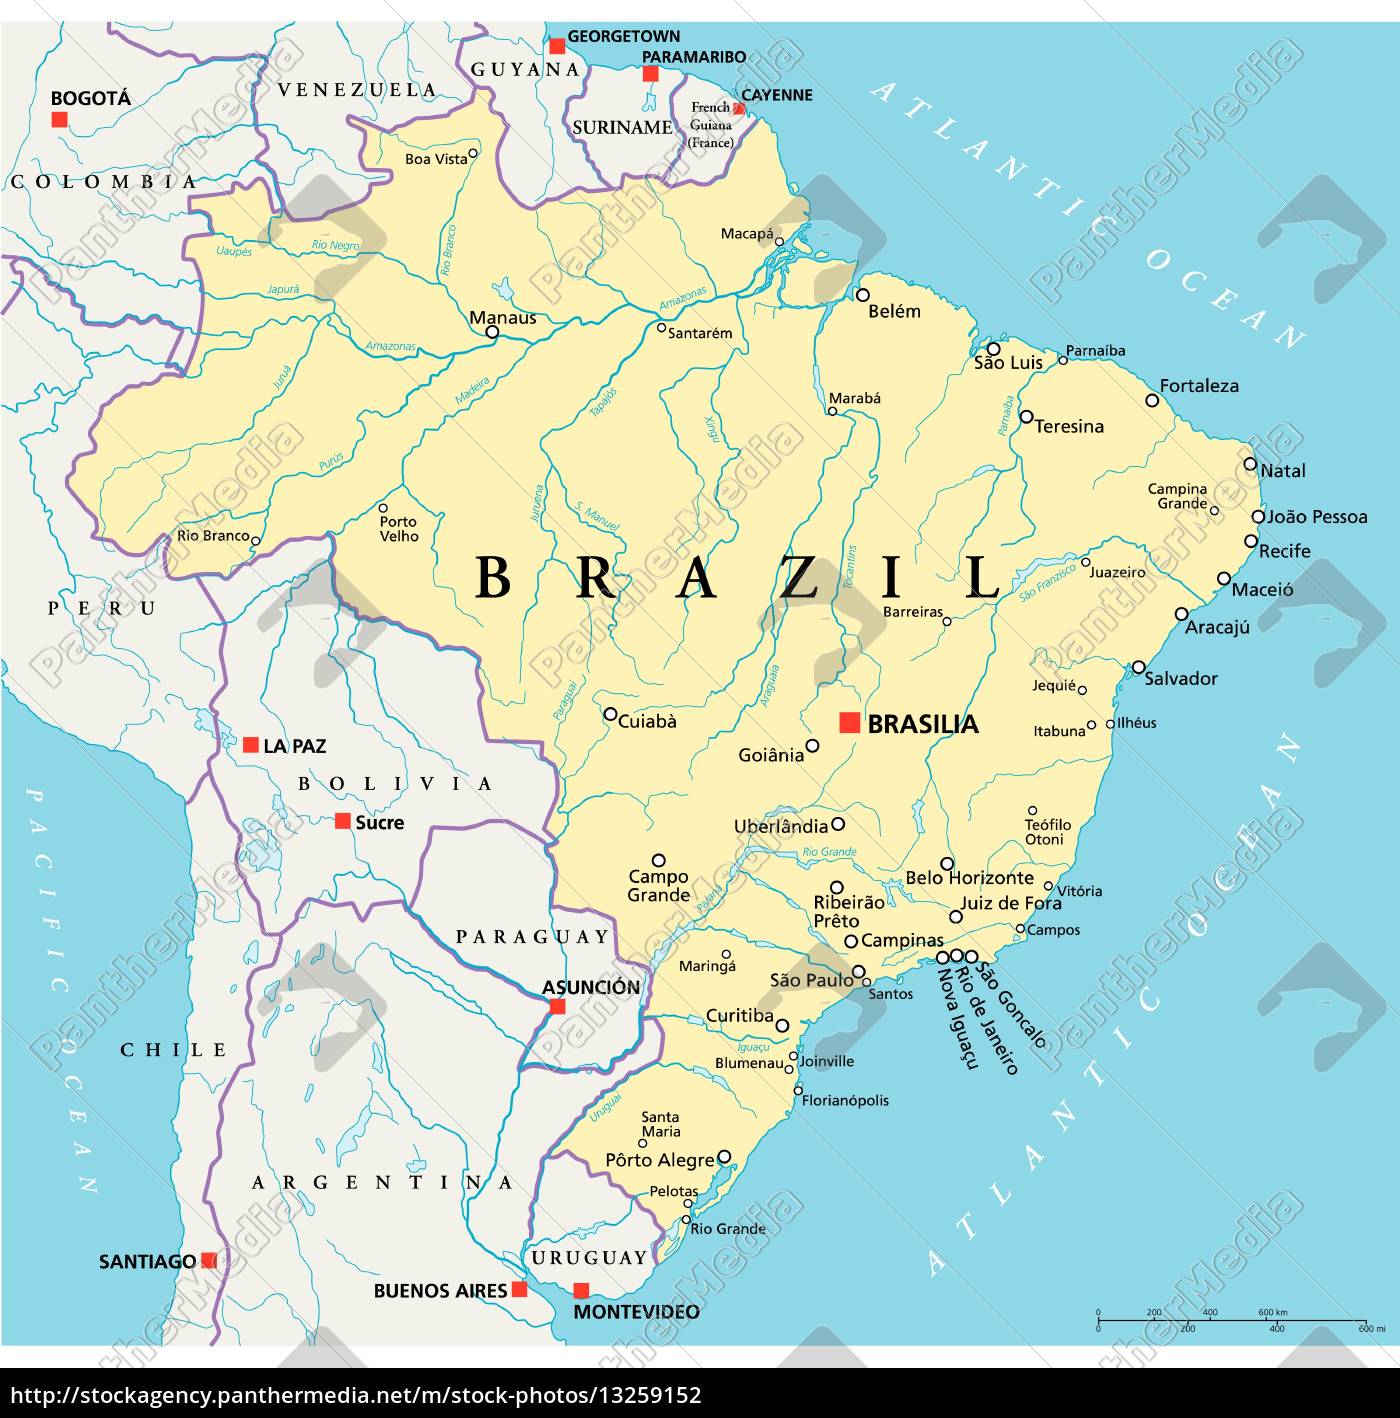 brazil political map - Royalty free photo - #13259152 | PantherMedia